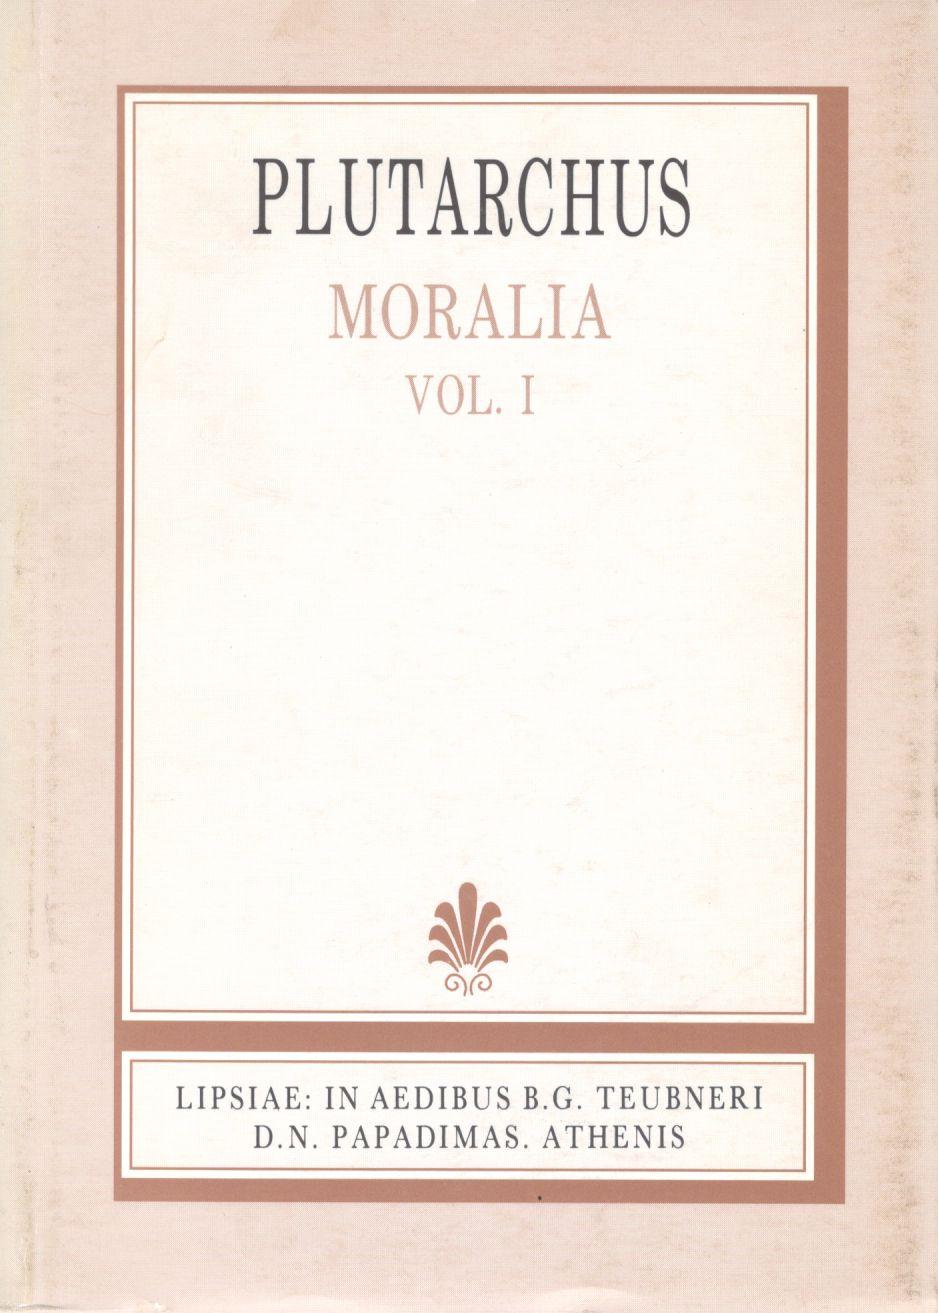 Plutarchi Moralia, Vol. I, [Πλουτάρχου, Ηθικά, τ. Α